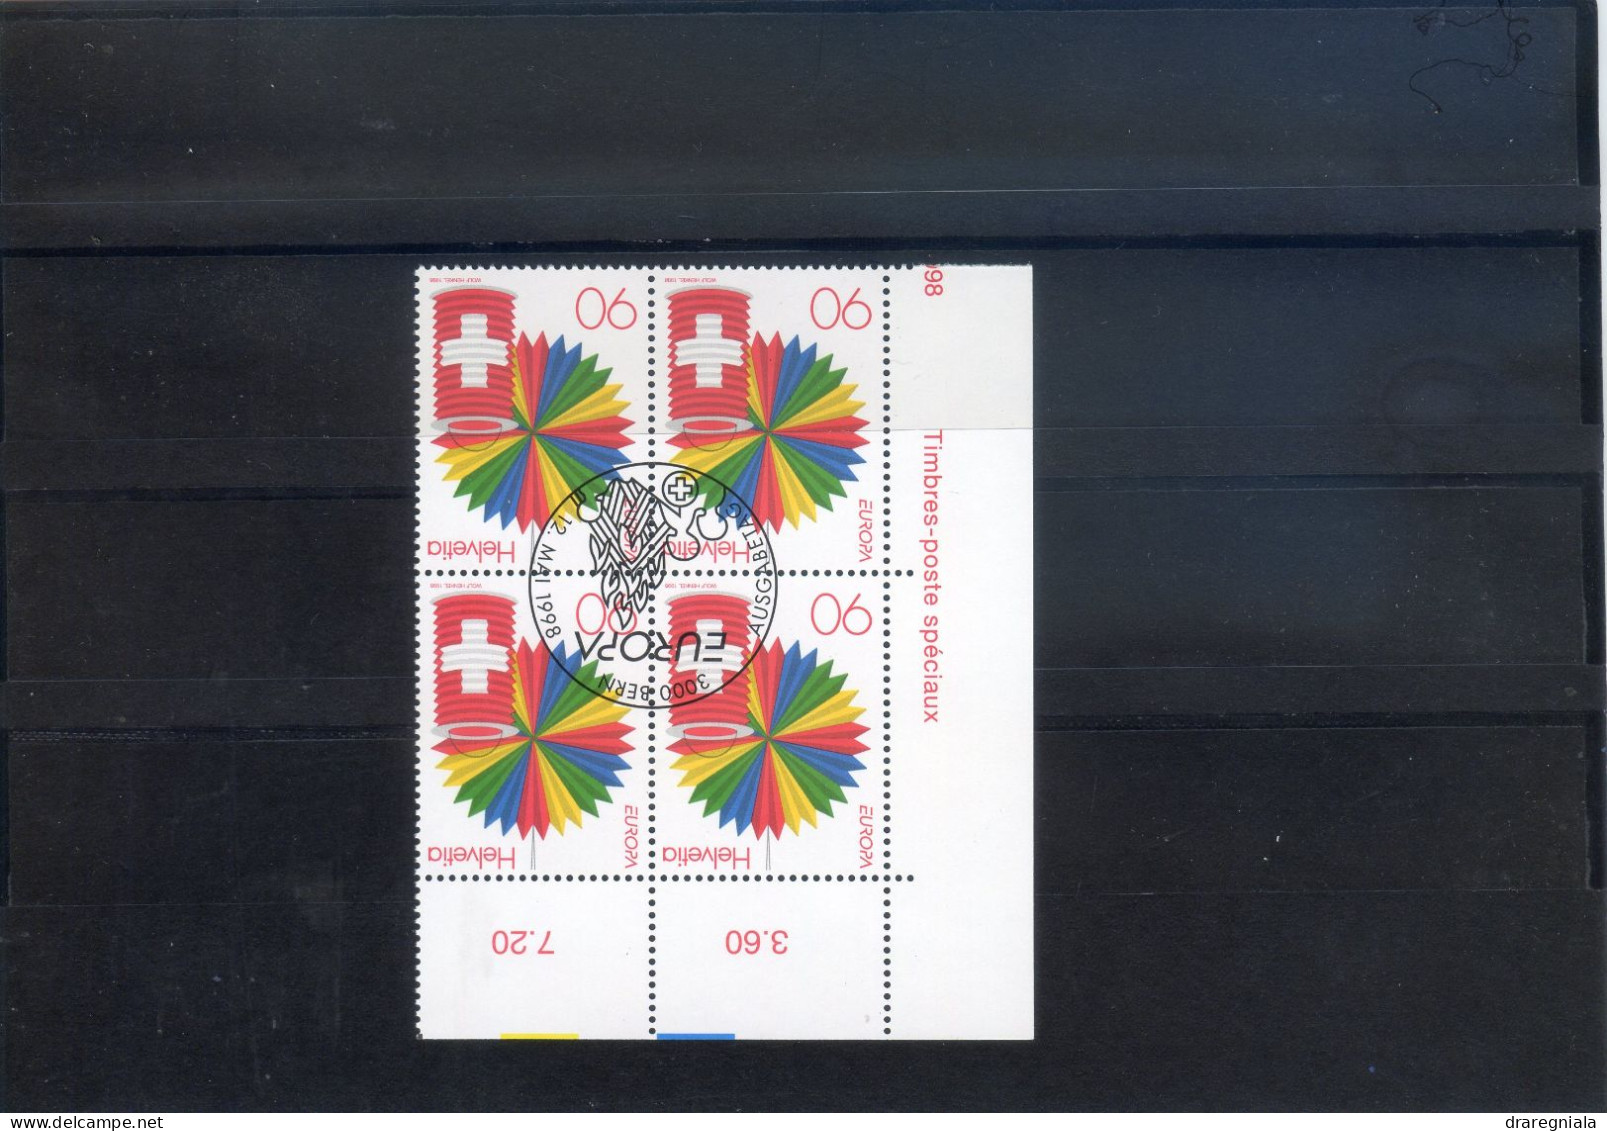 Bloc De 4 EUROPA HELVETIA SUISSE Oblitération 3000 BERN 12/05/1998 - Used Stamps